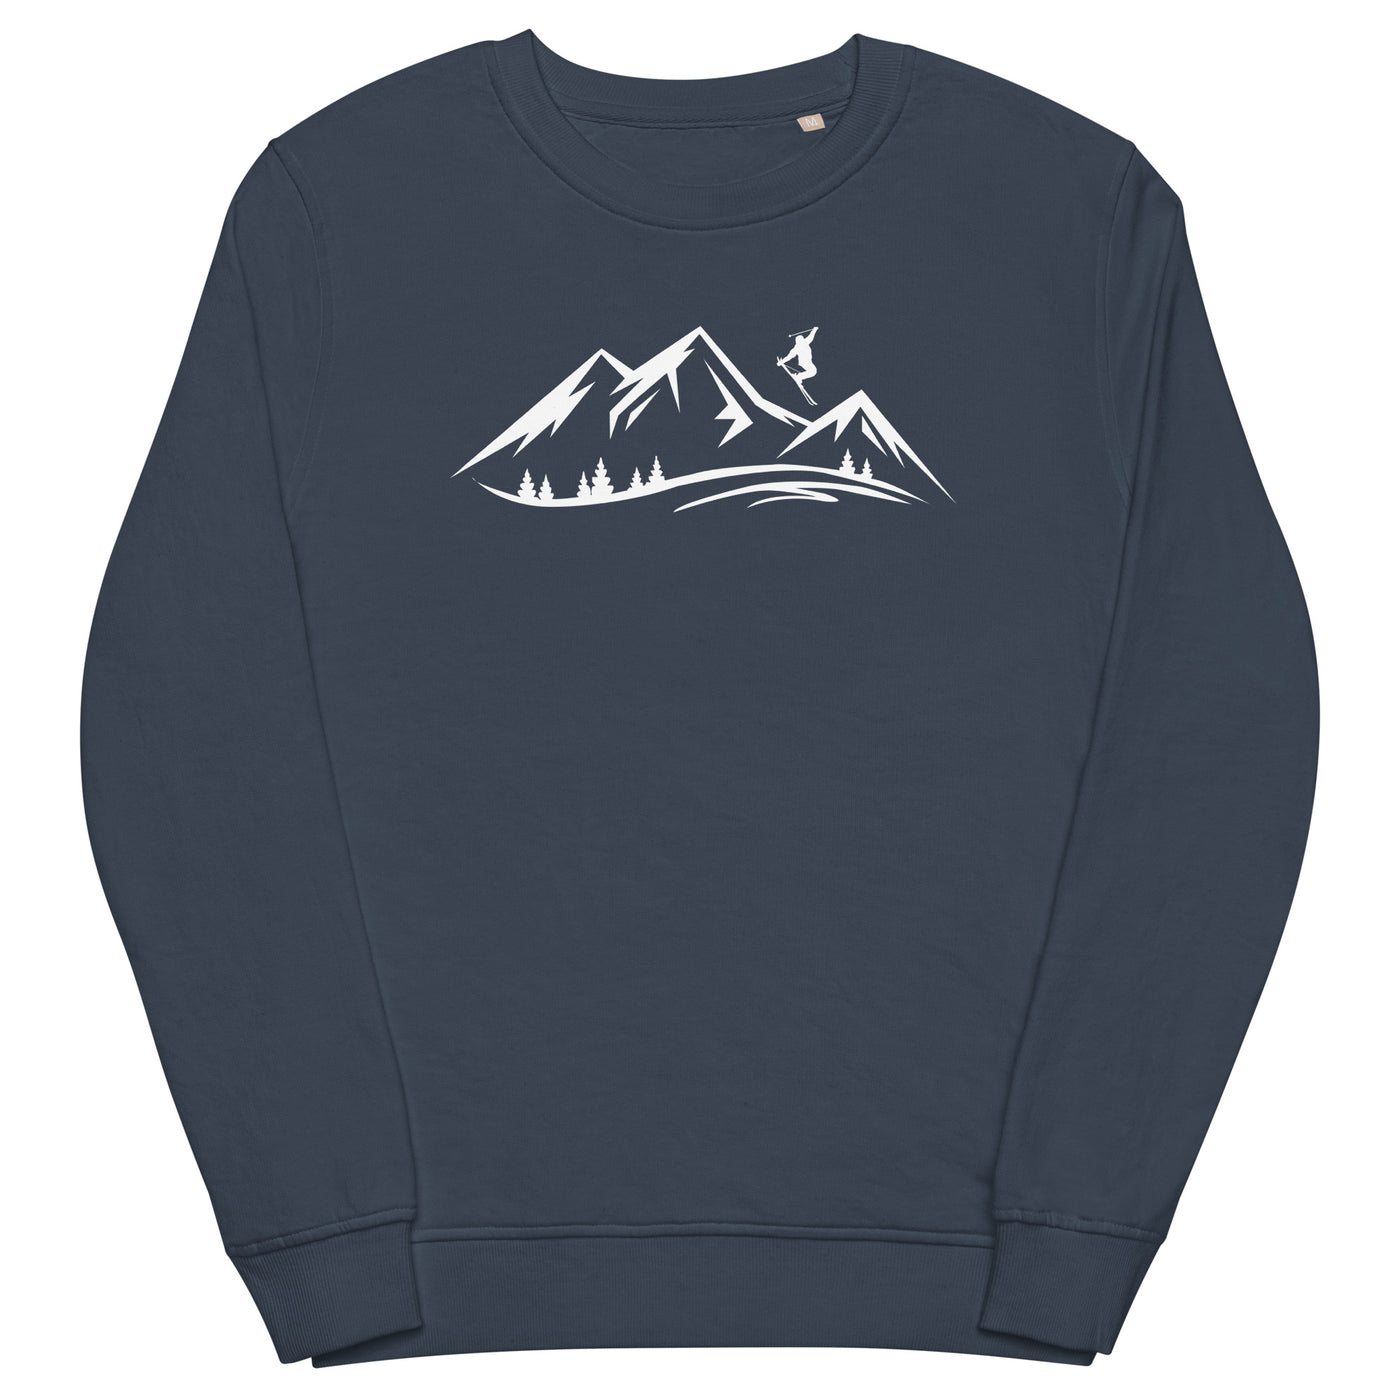 Berge und Skifahren - Unisex Premium Organic Sweatshirt klettern ski xxx yyy zzz French Navy